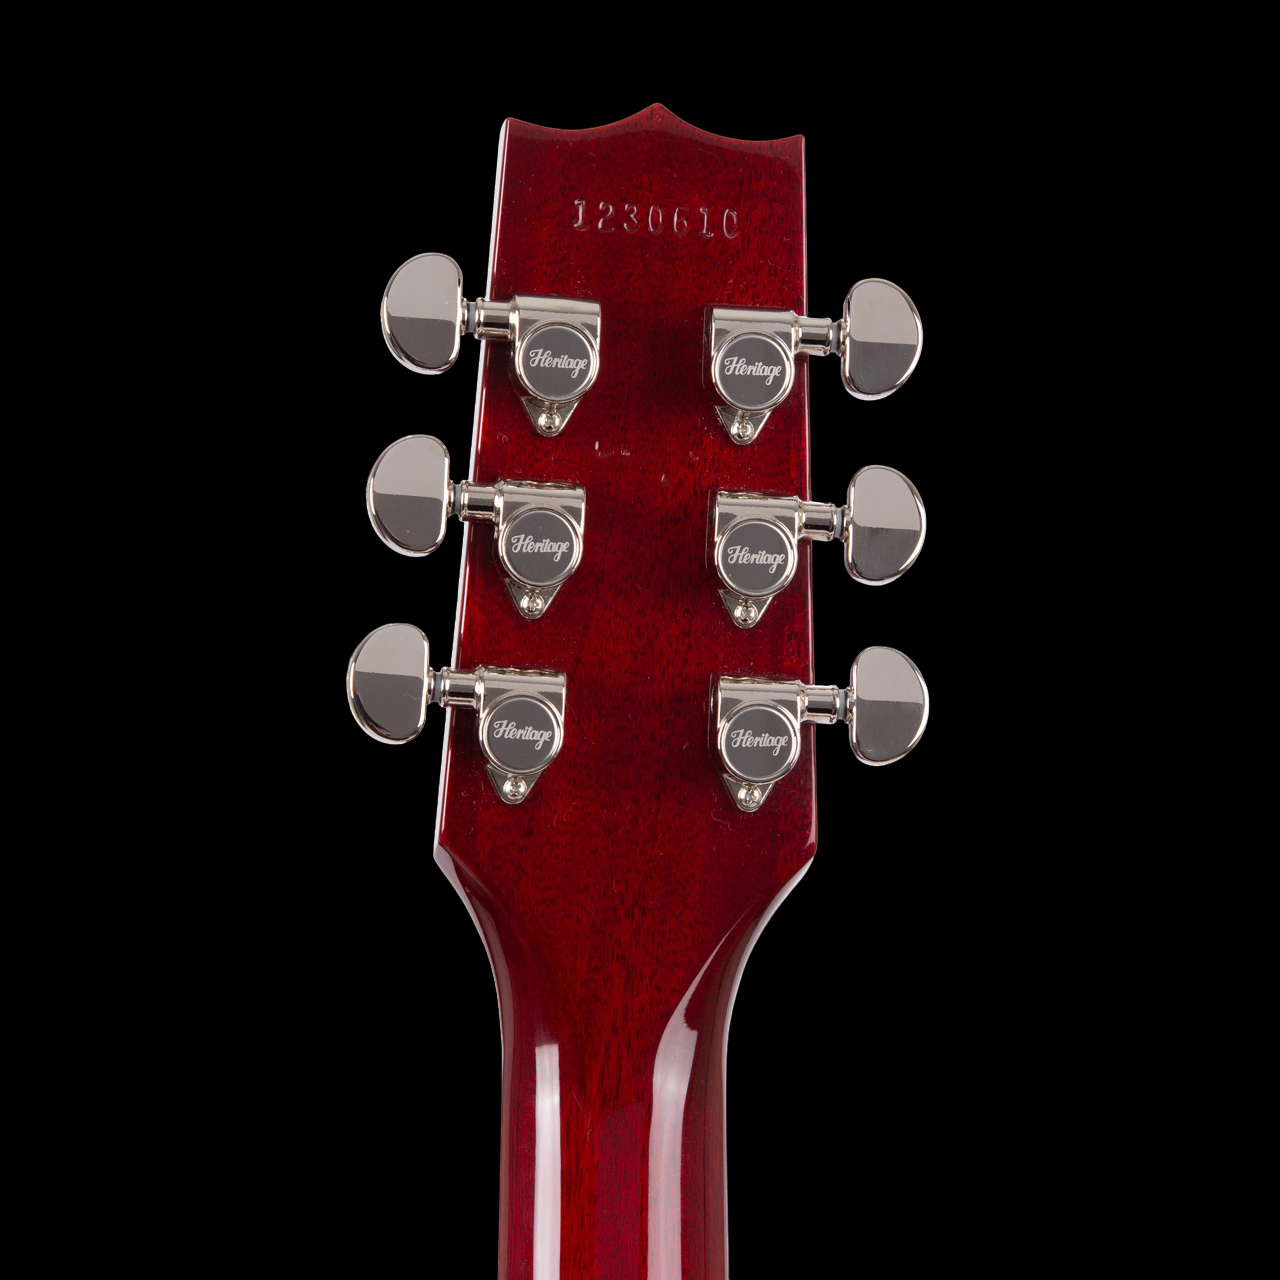 Heritage H530 Standard Hollow Body Trans Cherry Electric Guitar-Floor Model